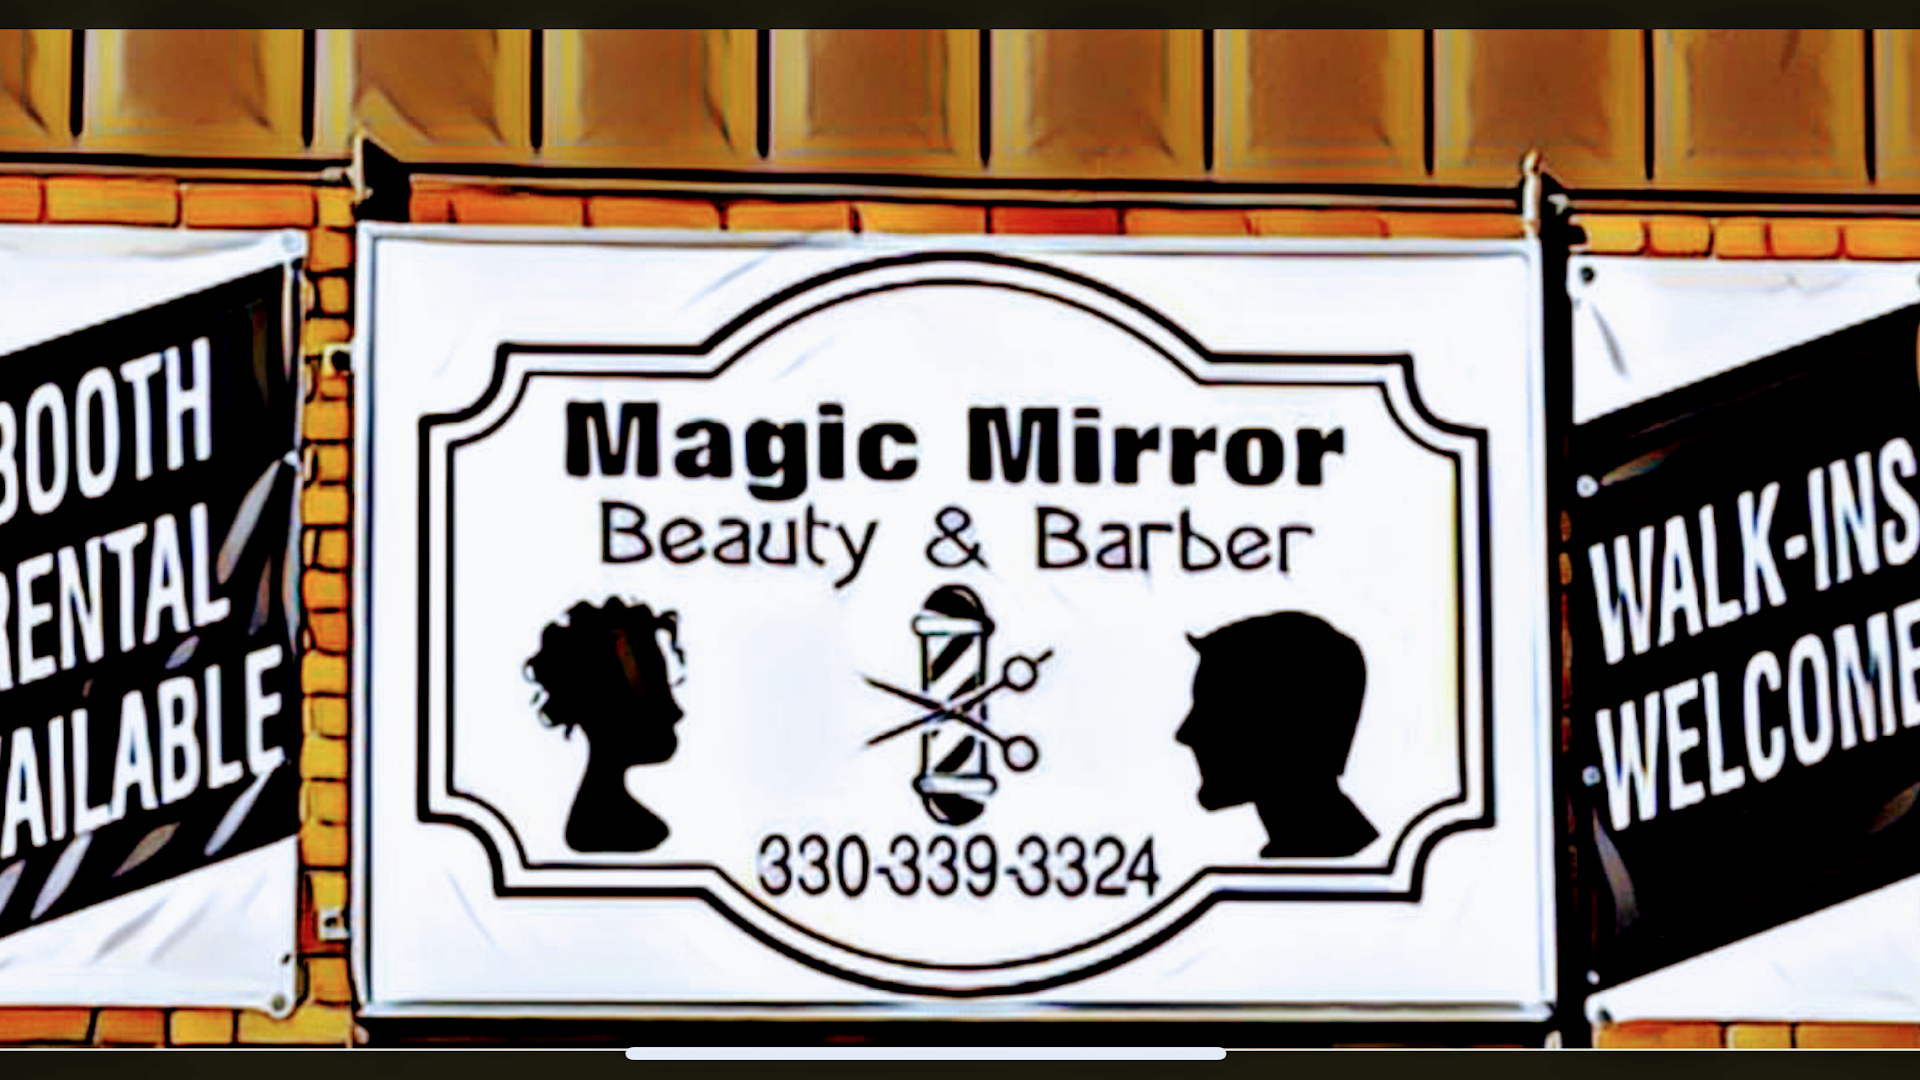 Magic Mirror Beauty & Barber